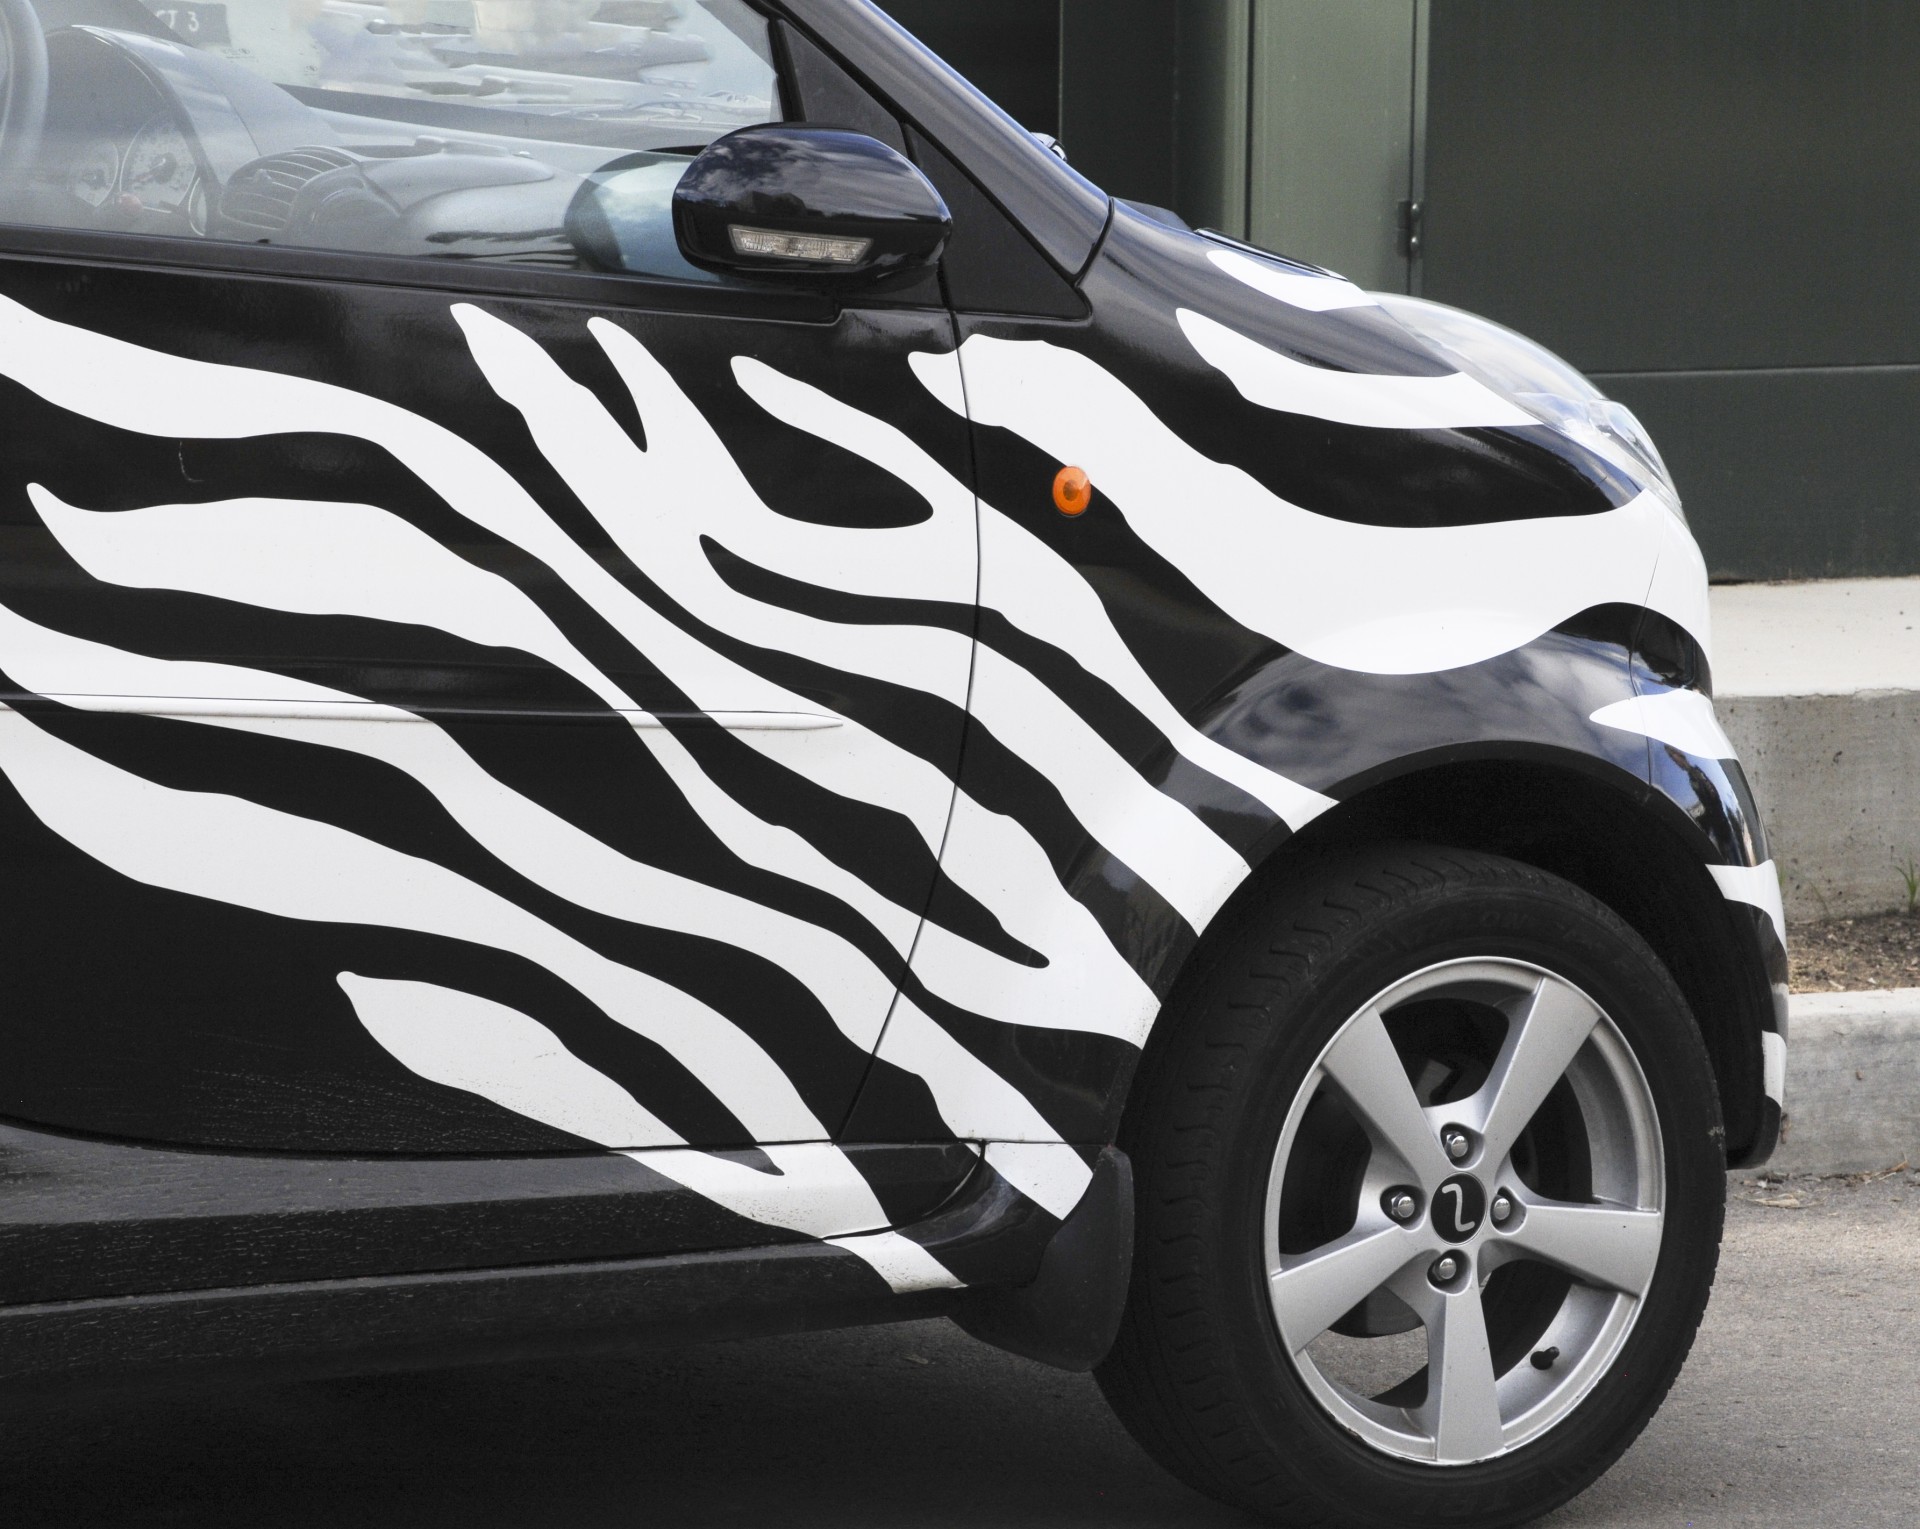 Zebra auto